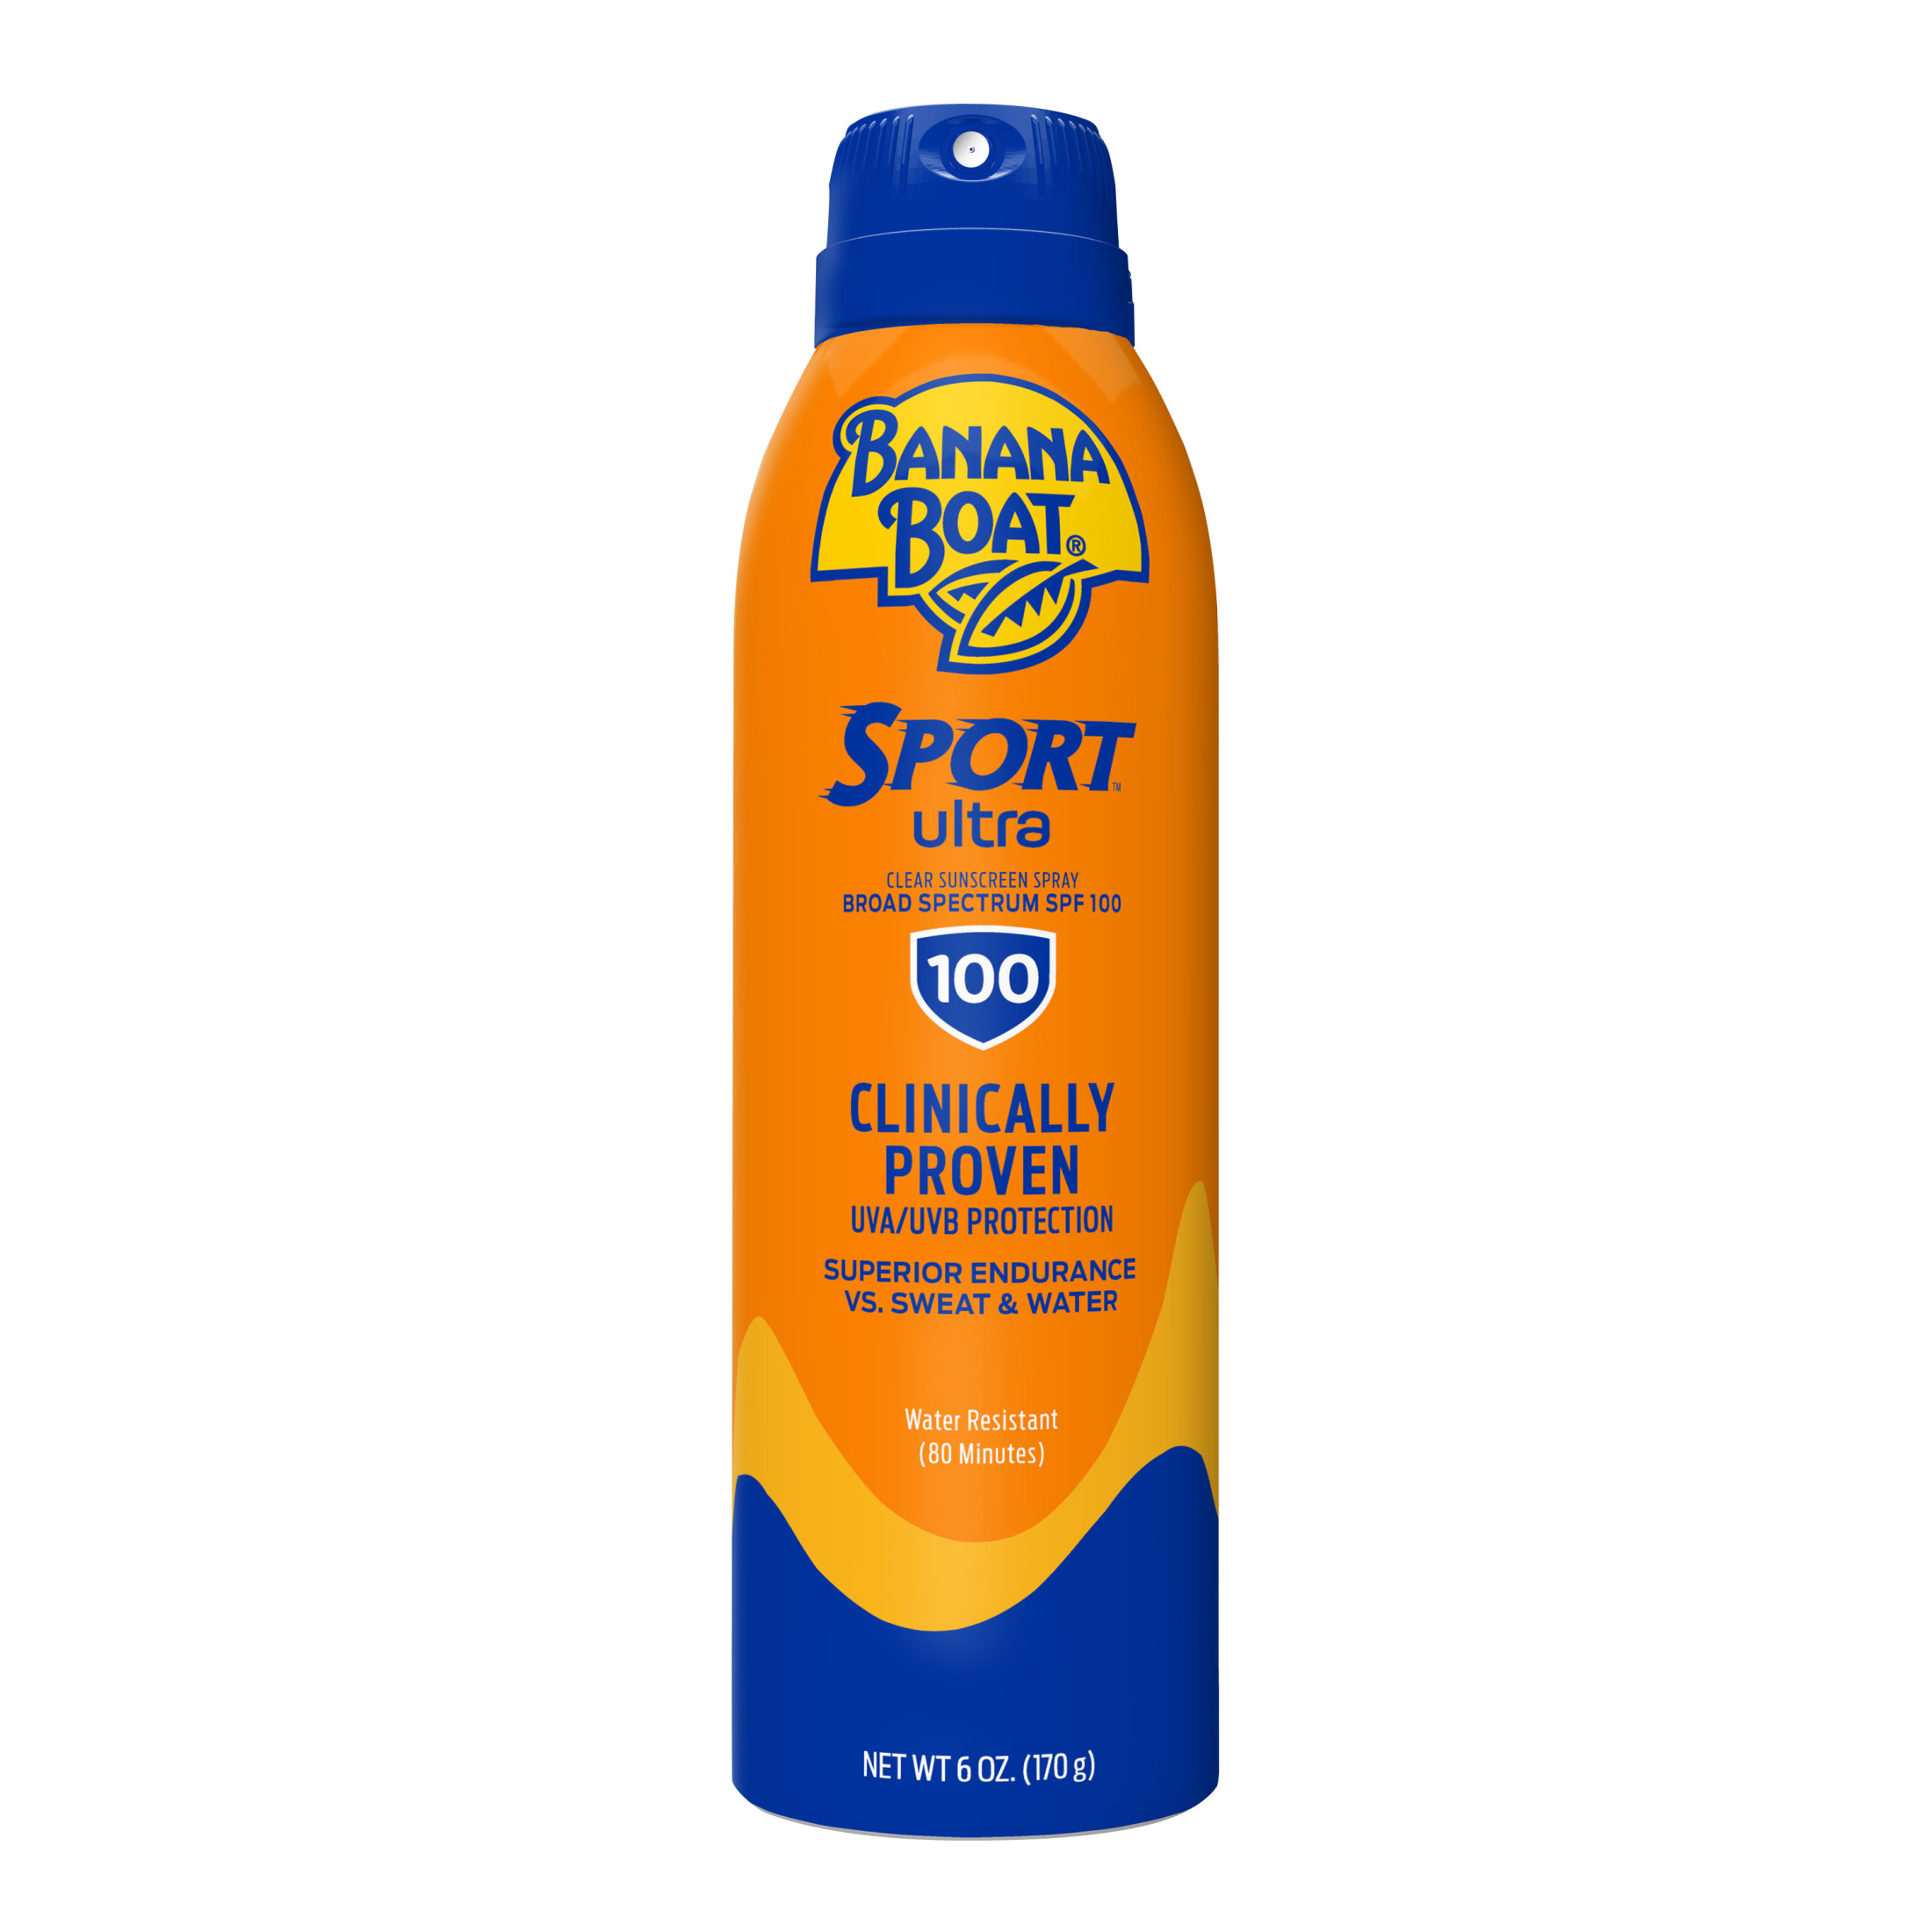 Banana Boat Sport Ultra 100 SPF Sunscreen Spray, 6 Oz, Water Resistant (80 Minutes) Sun Block - image 2 of 9